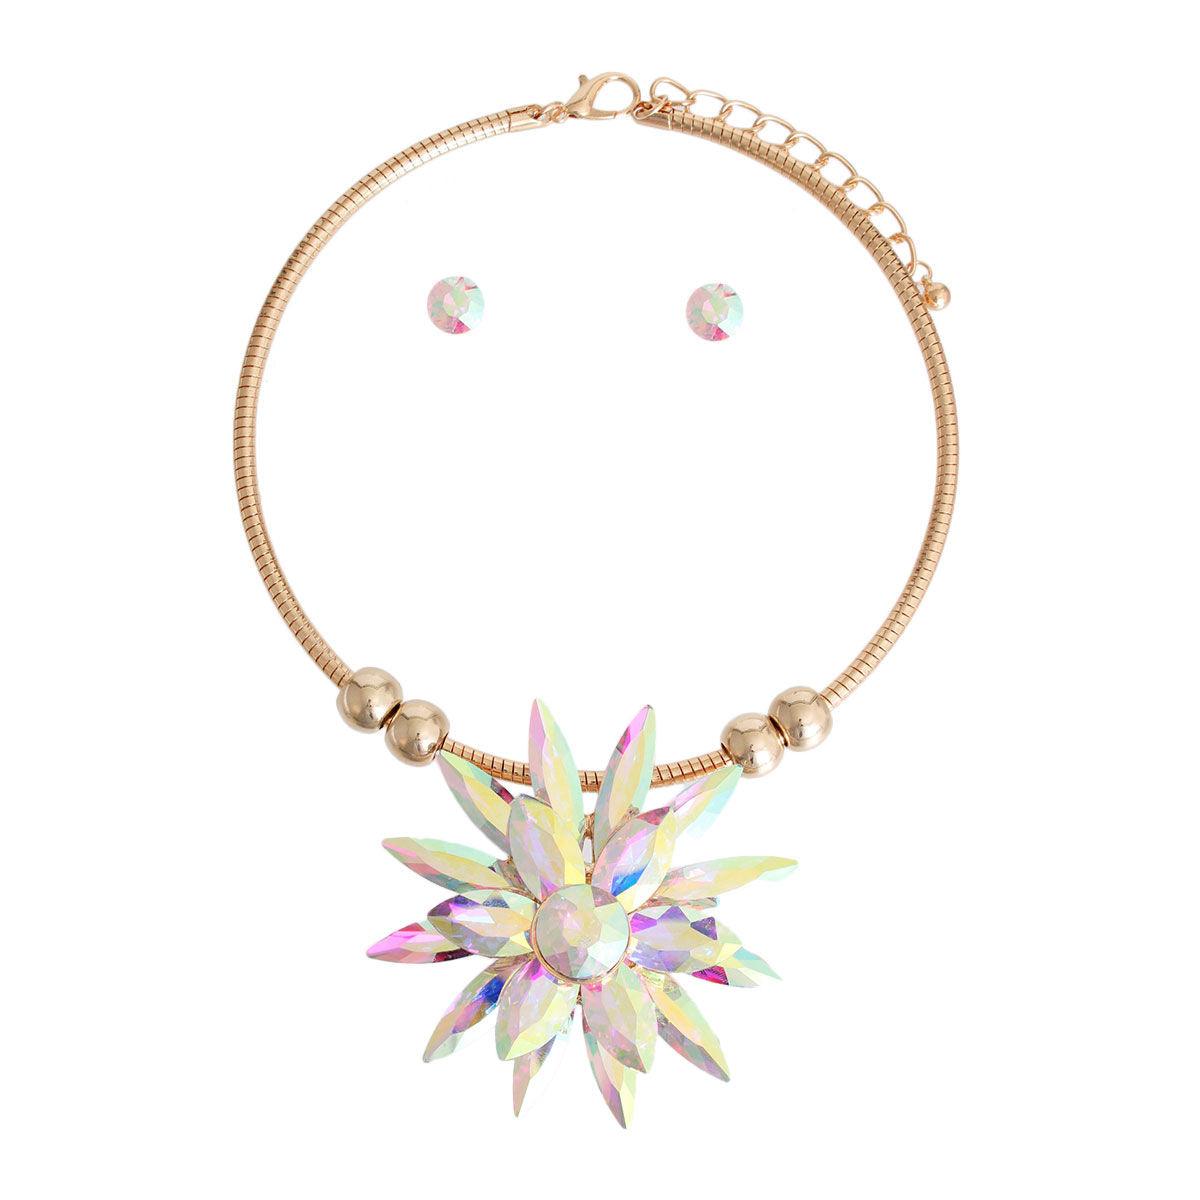 Introducing the Aurora Borealis Flower Gold Tone Necklace Set